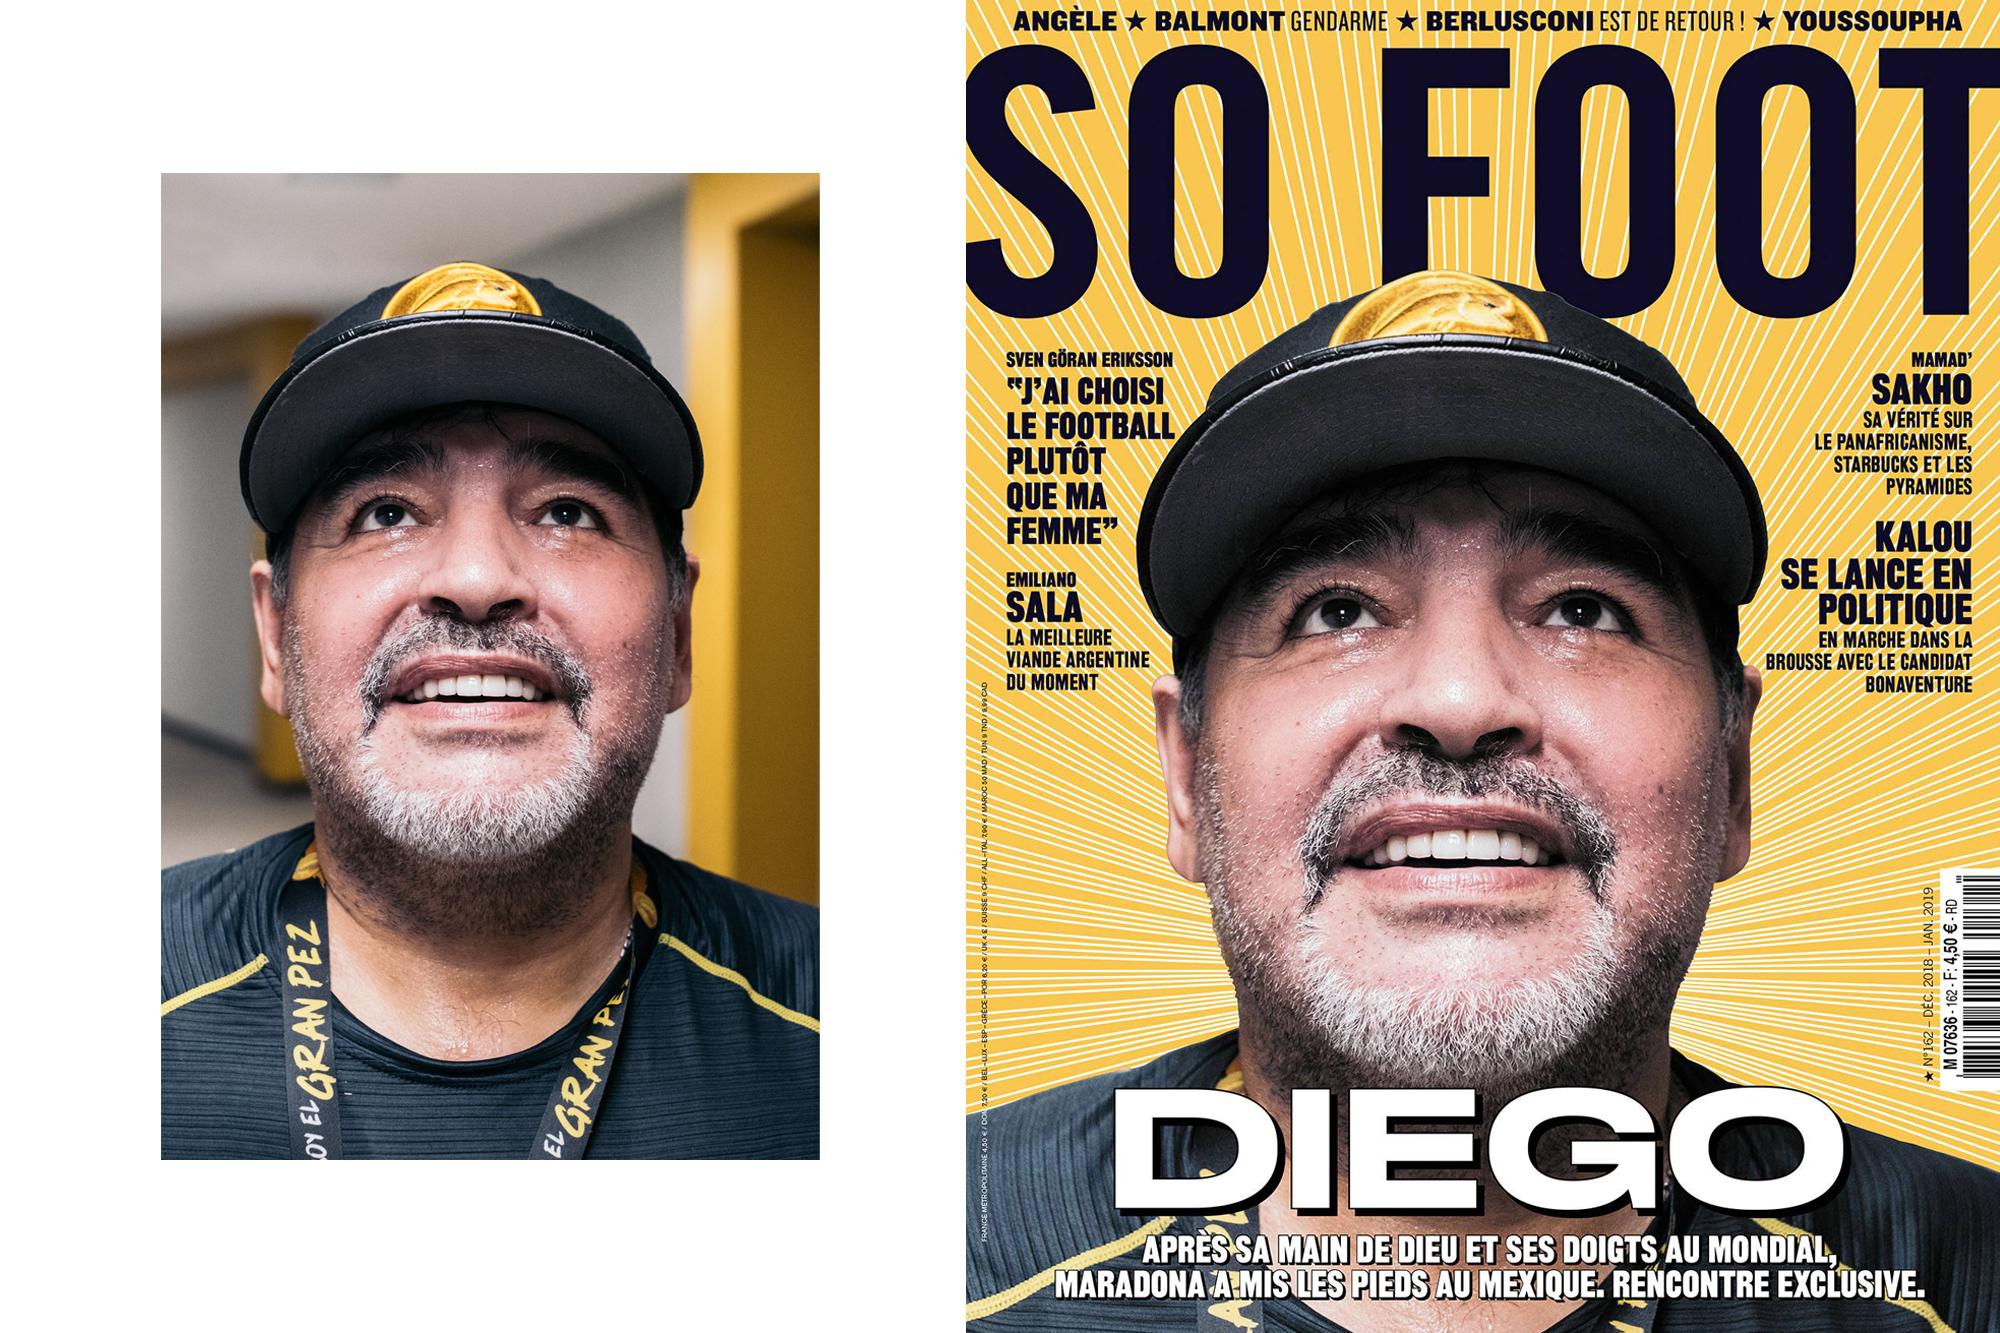  Diego Maradona, Argentine international footballer and coach of Los Dorados, Culiacan team.&nbsp; Shot on assignment for SO FOOT.&nbsp; Culiacan, Mexico, October 2018. 